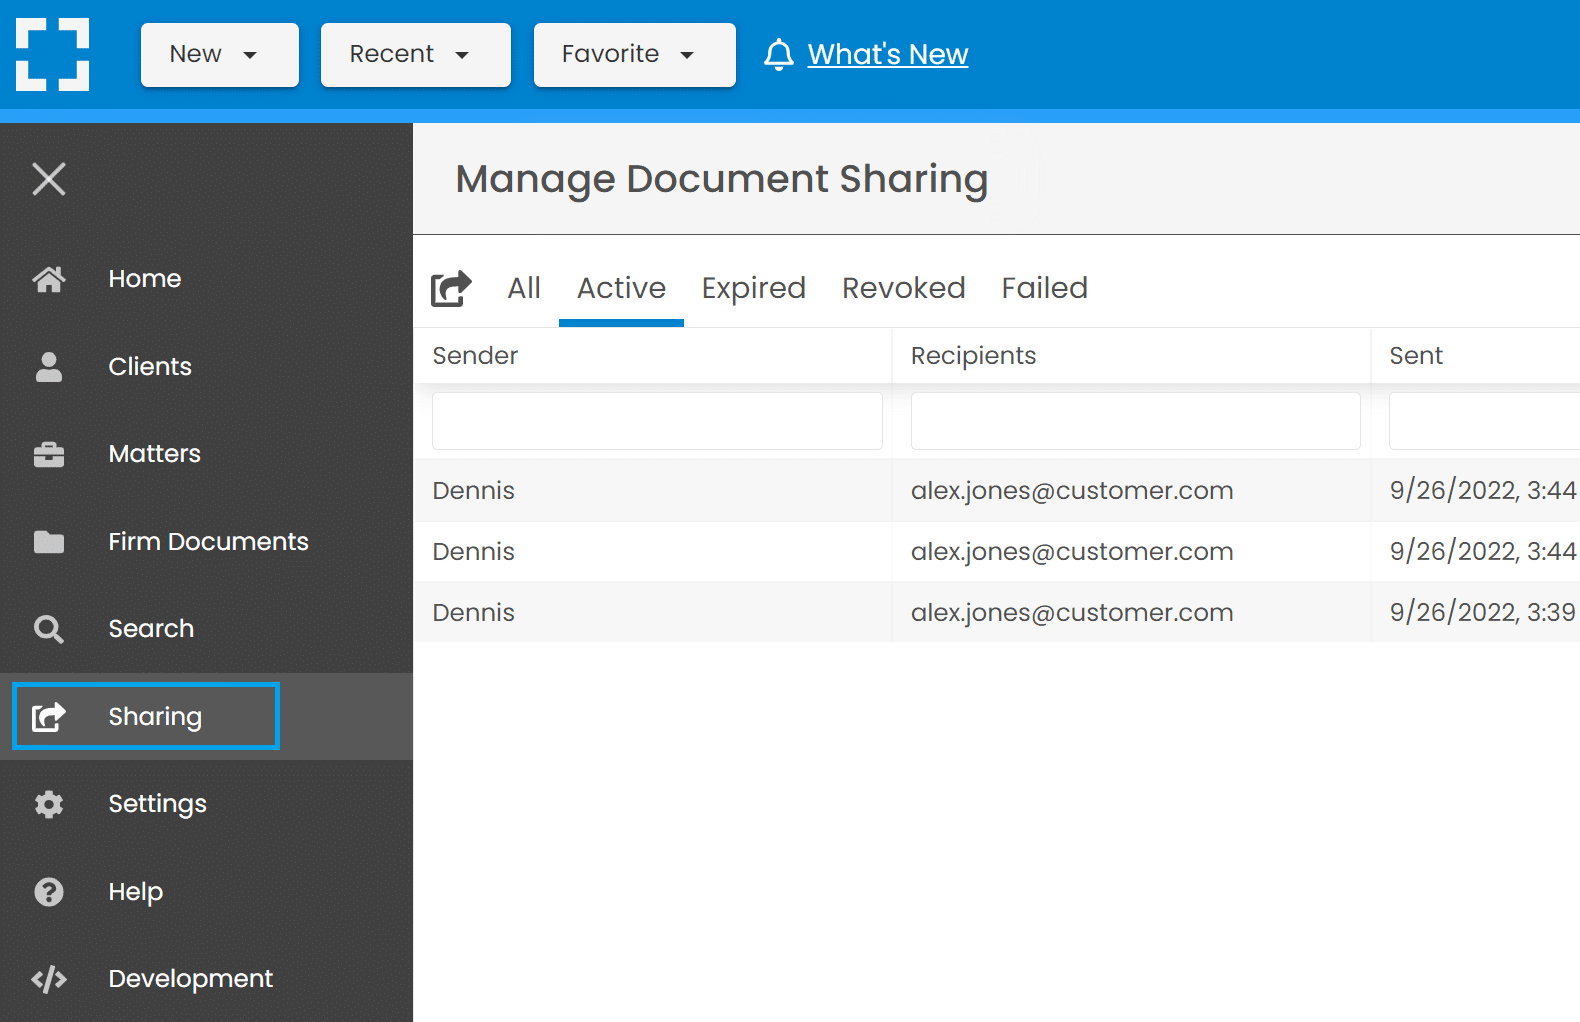 Manage Document Sharing